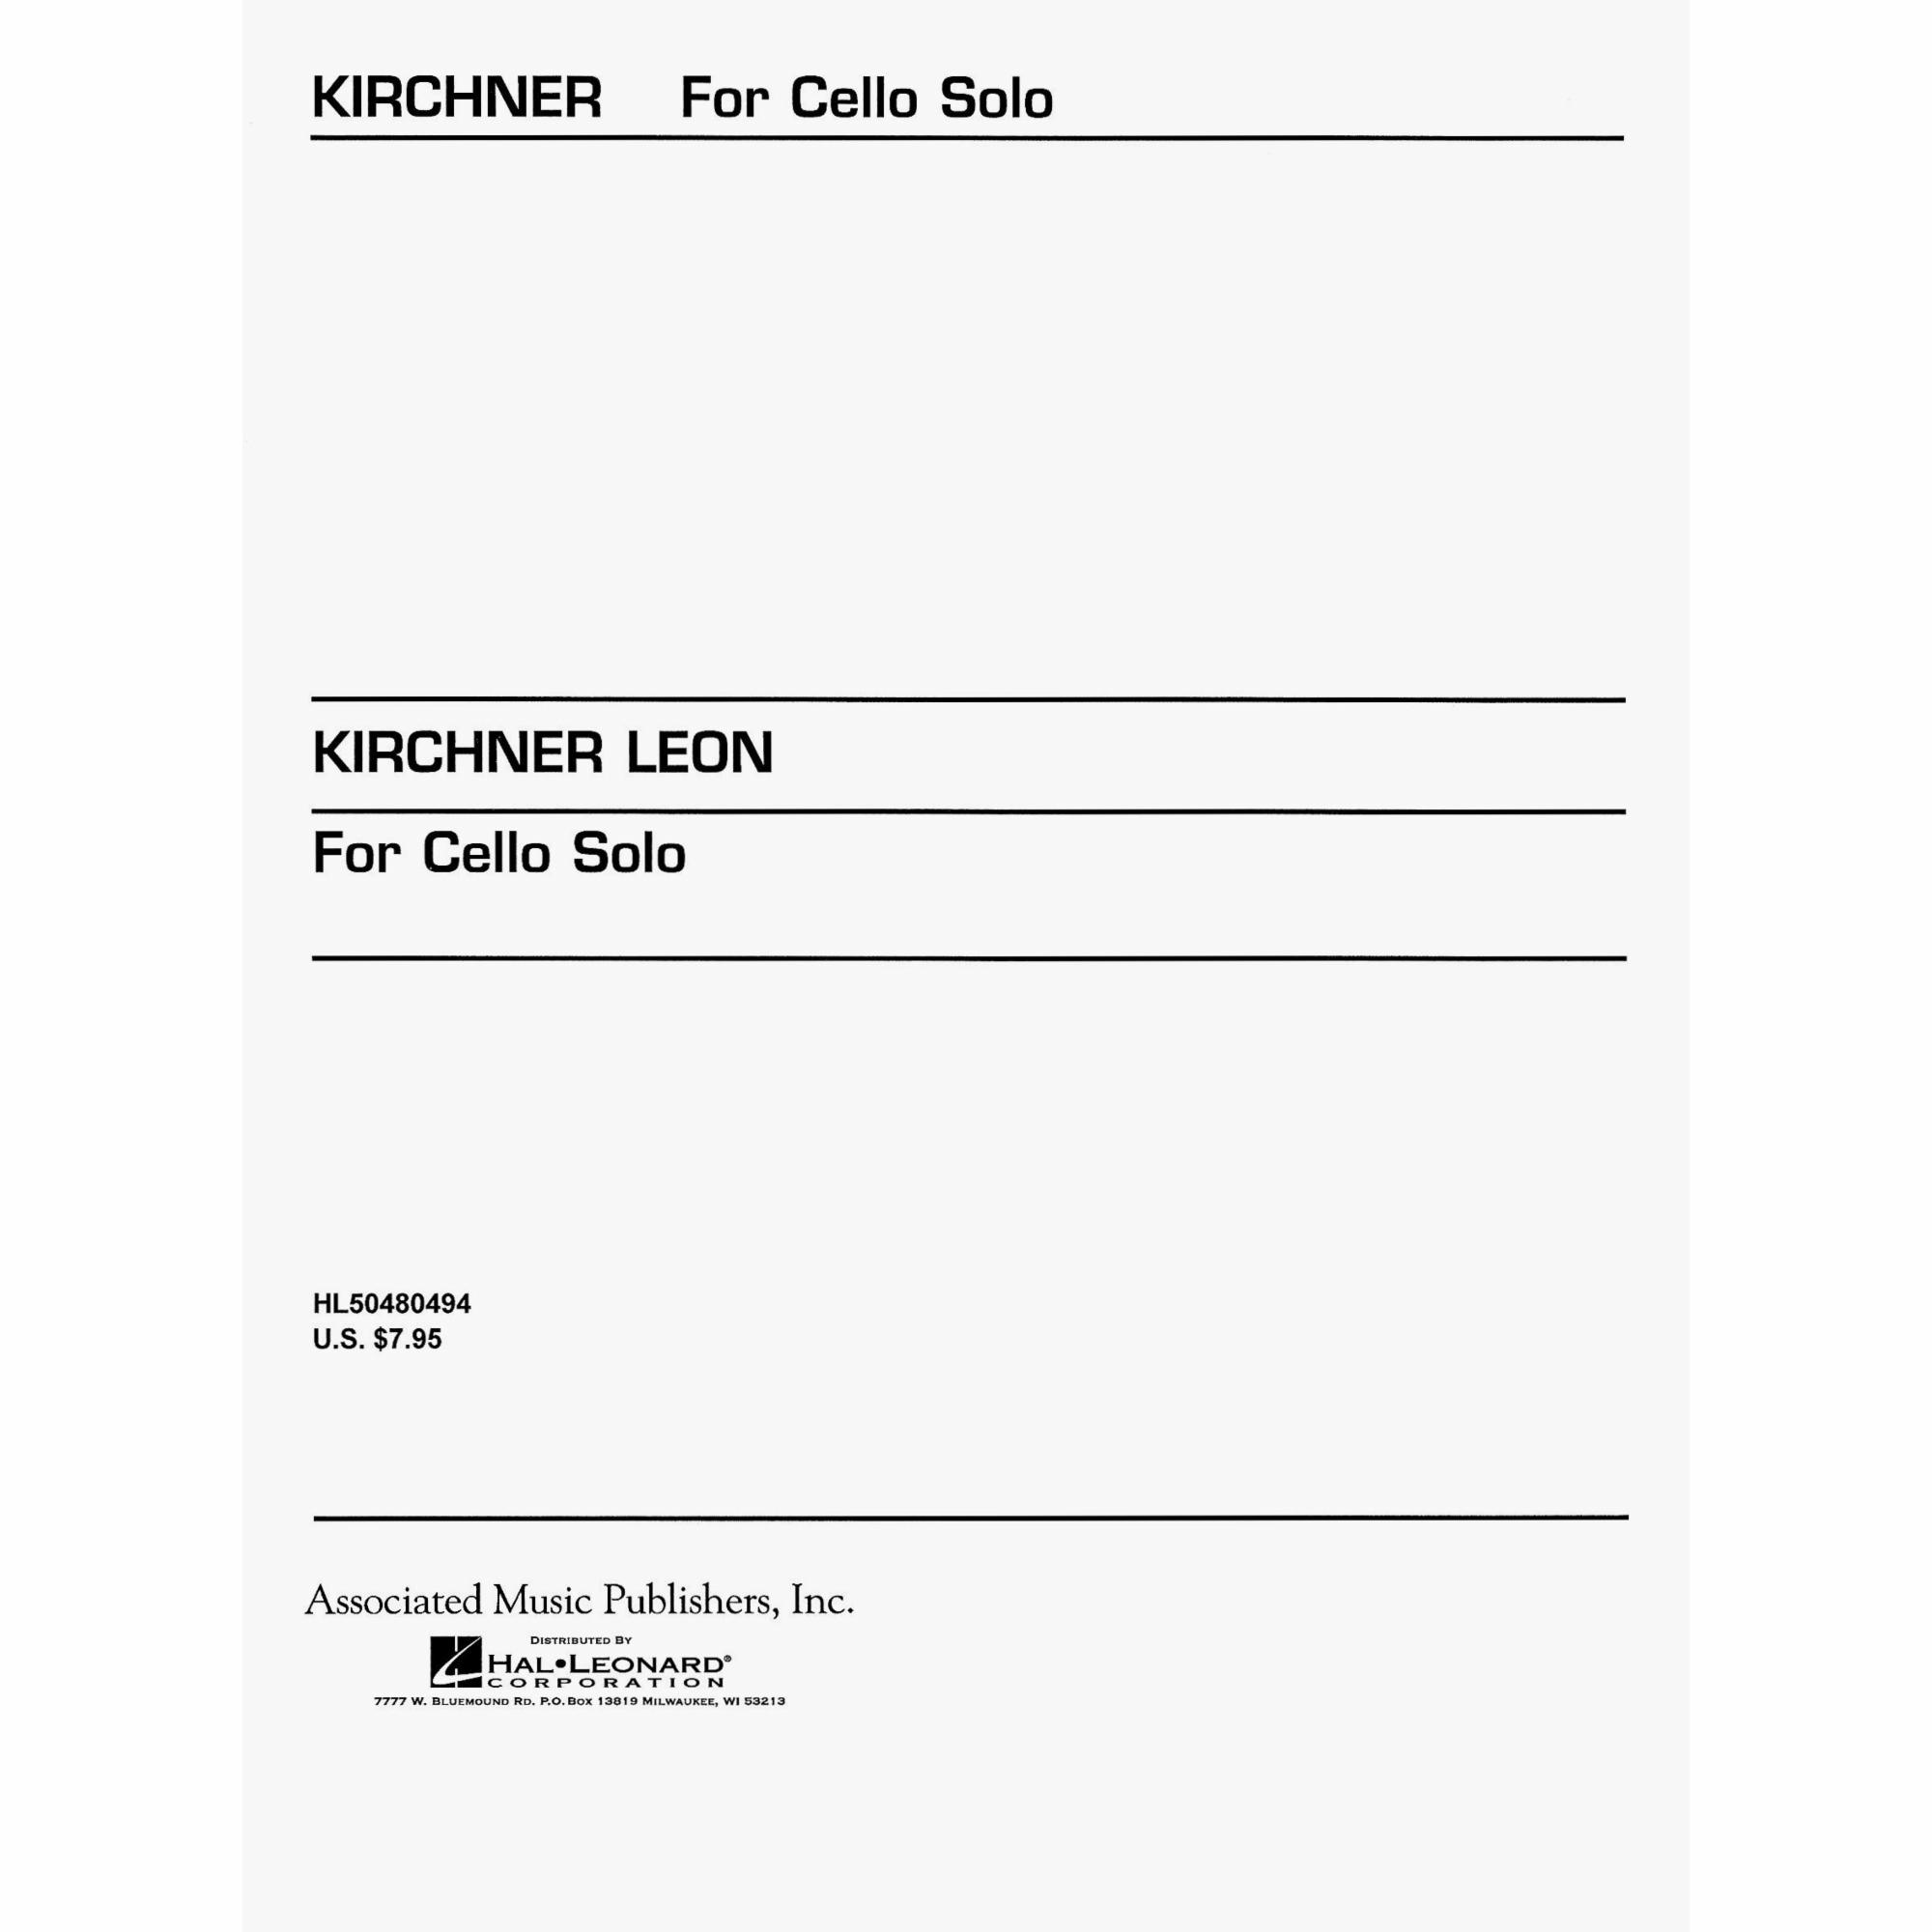 Kirchner -- For Cello Solo